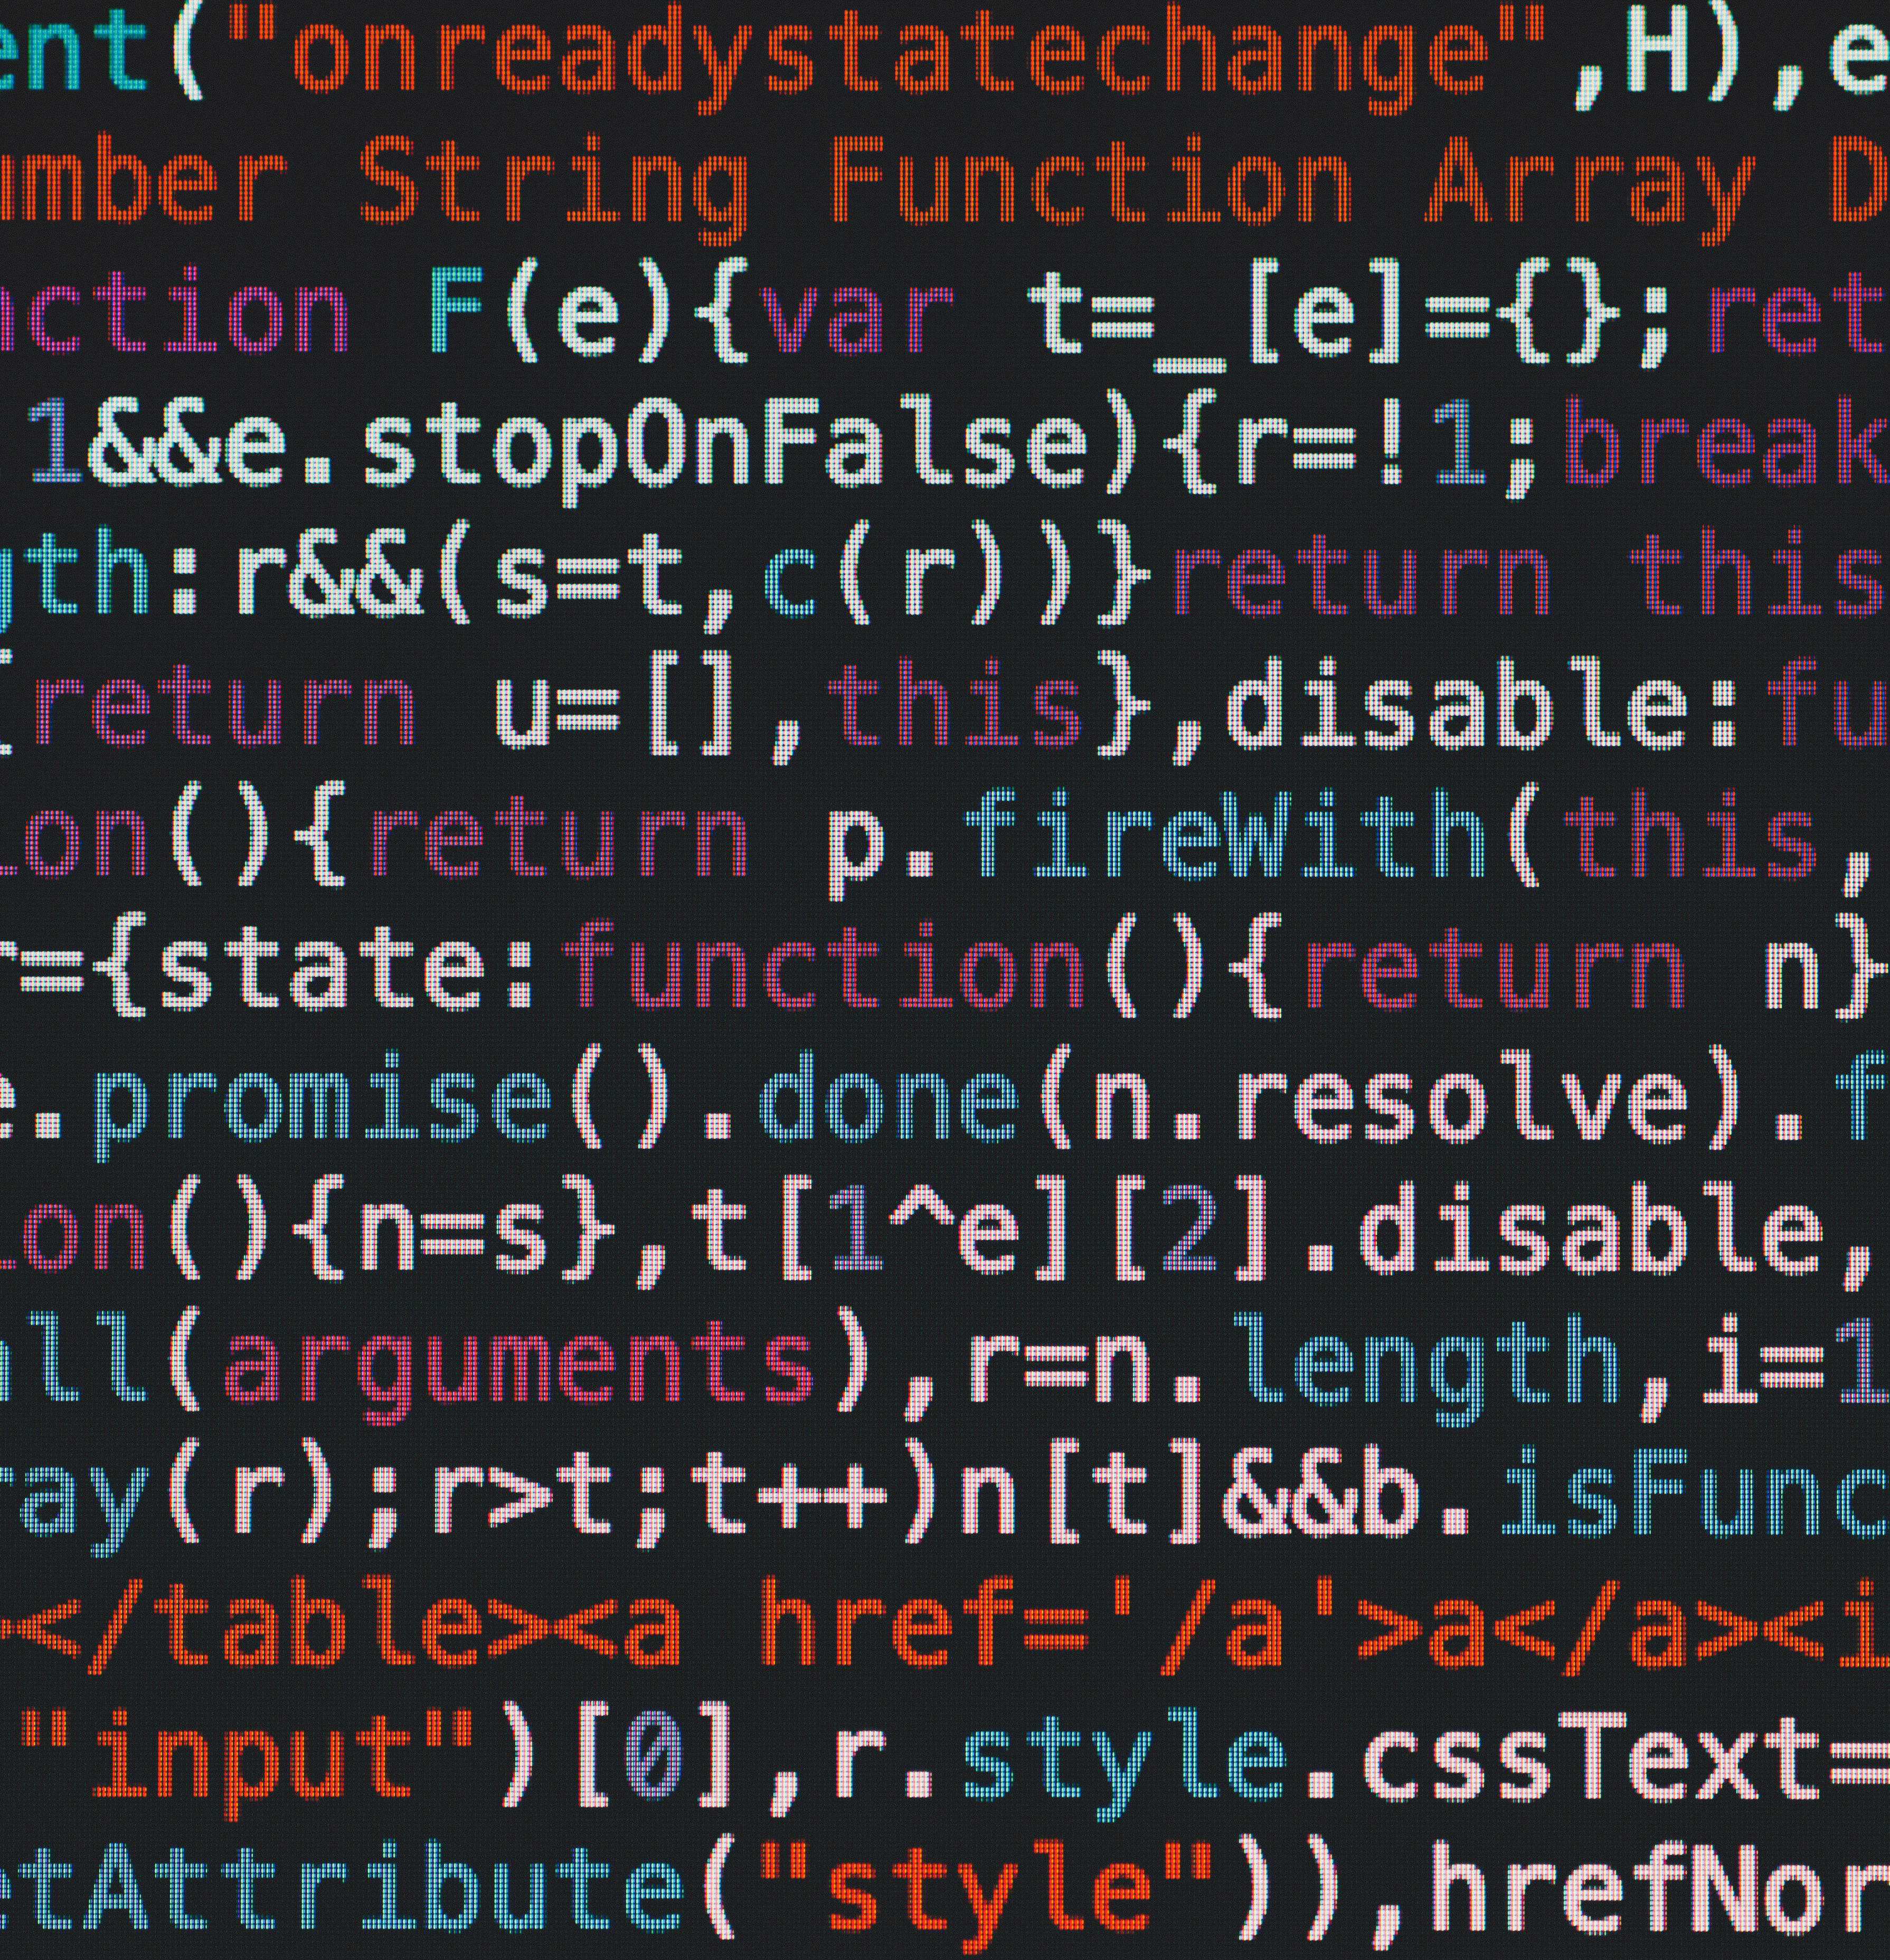 A screen full of computer code